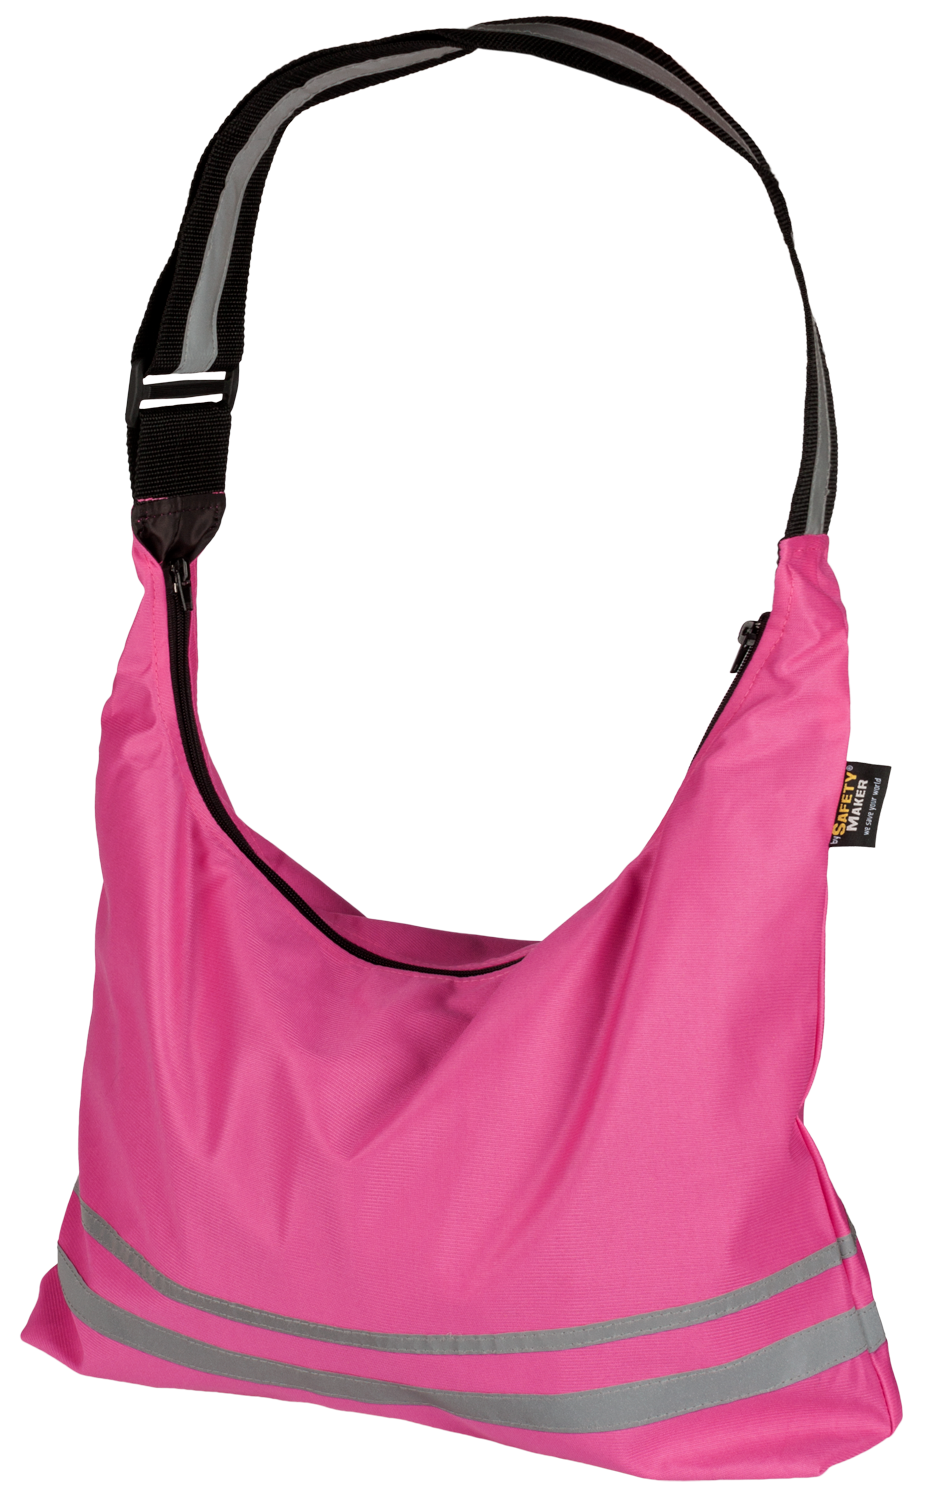 Foldable shopping bag pink